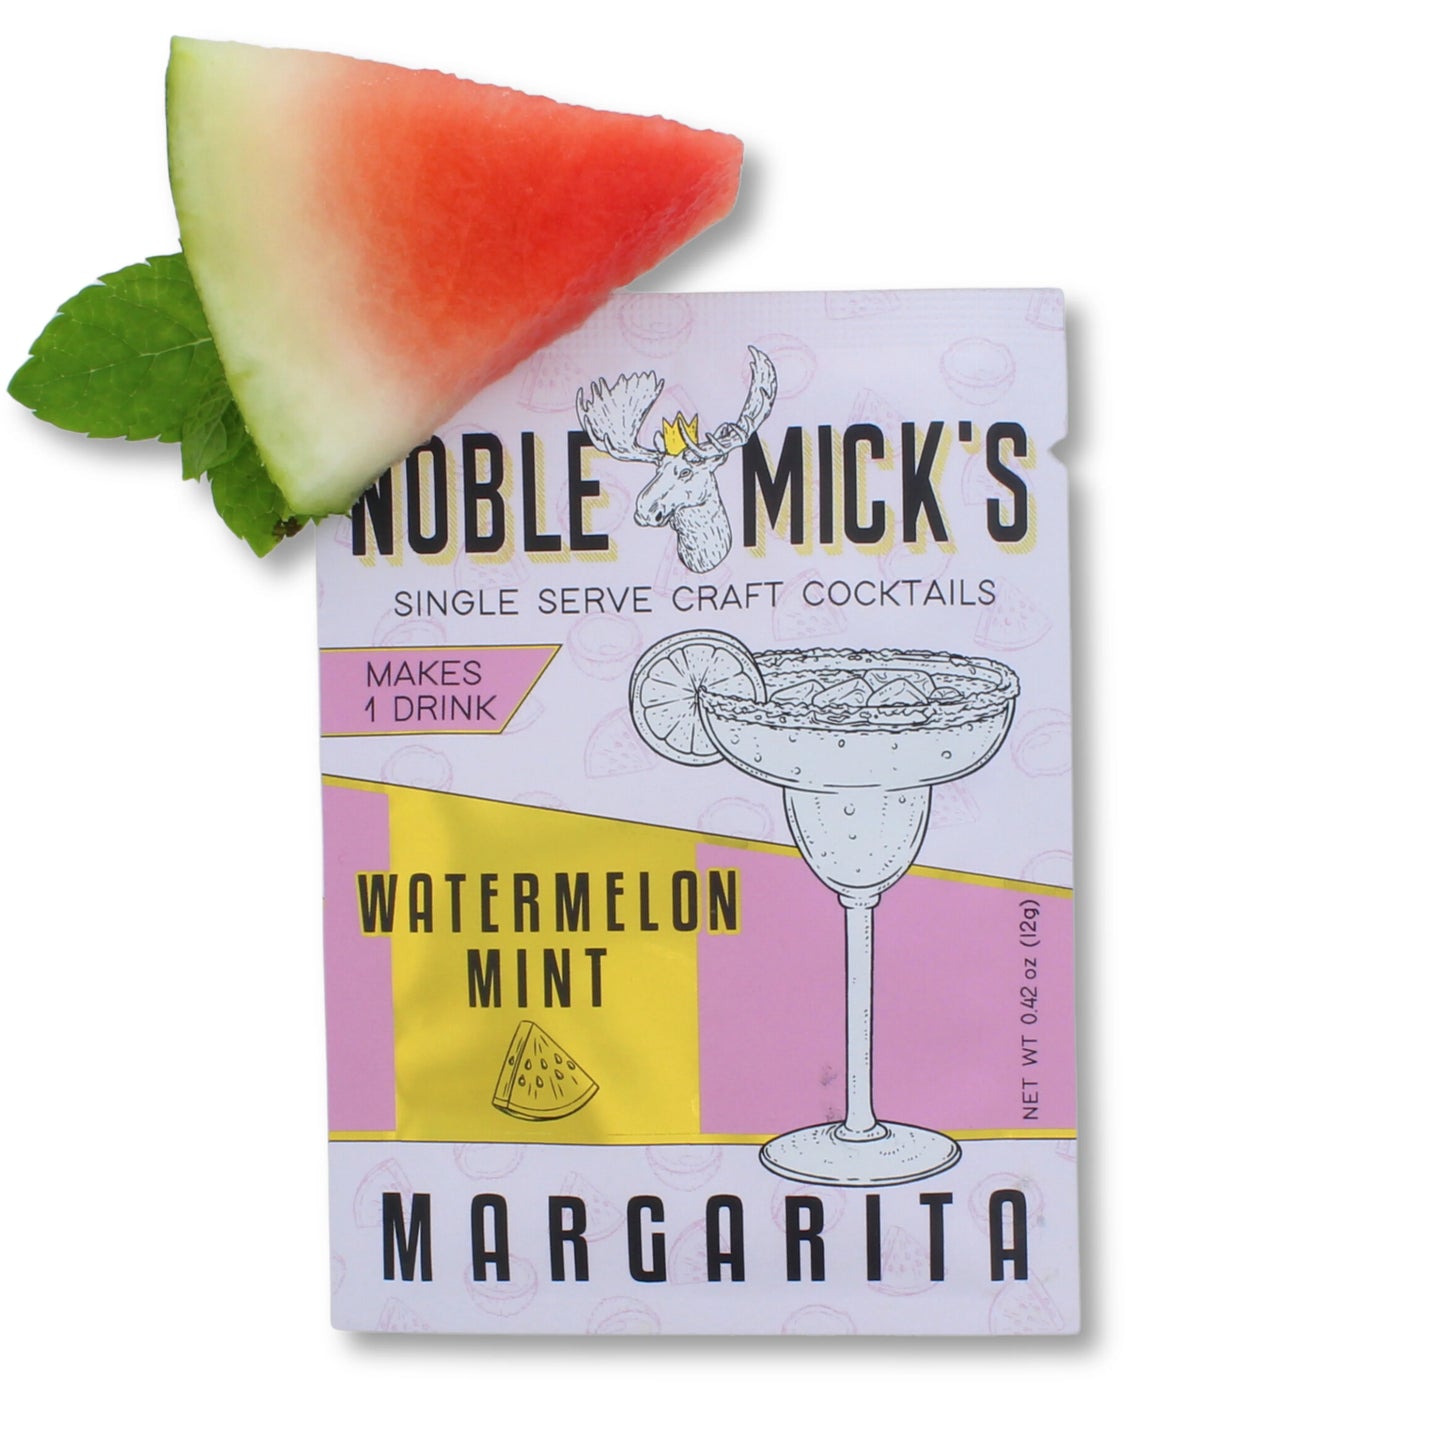 Noble Mick's "Watermelon Mint" Margarita Single Serve Cocktail Mix